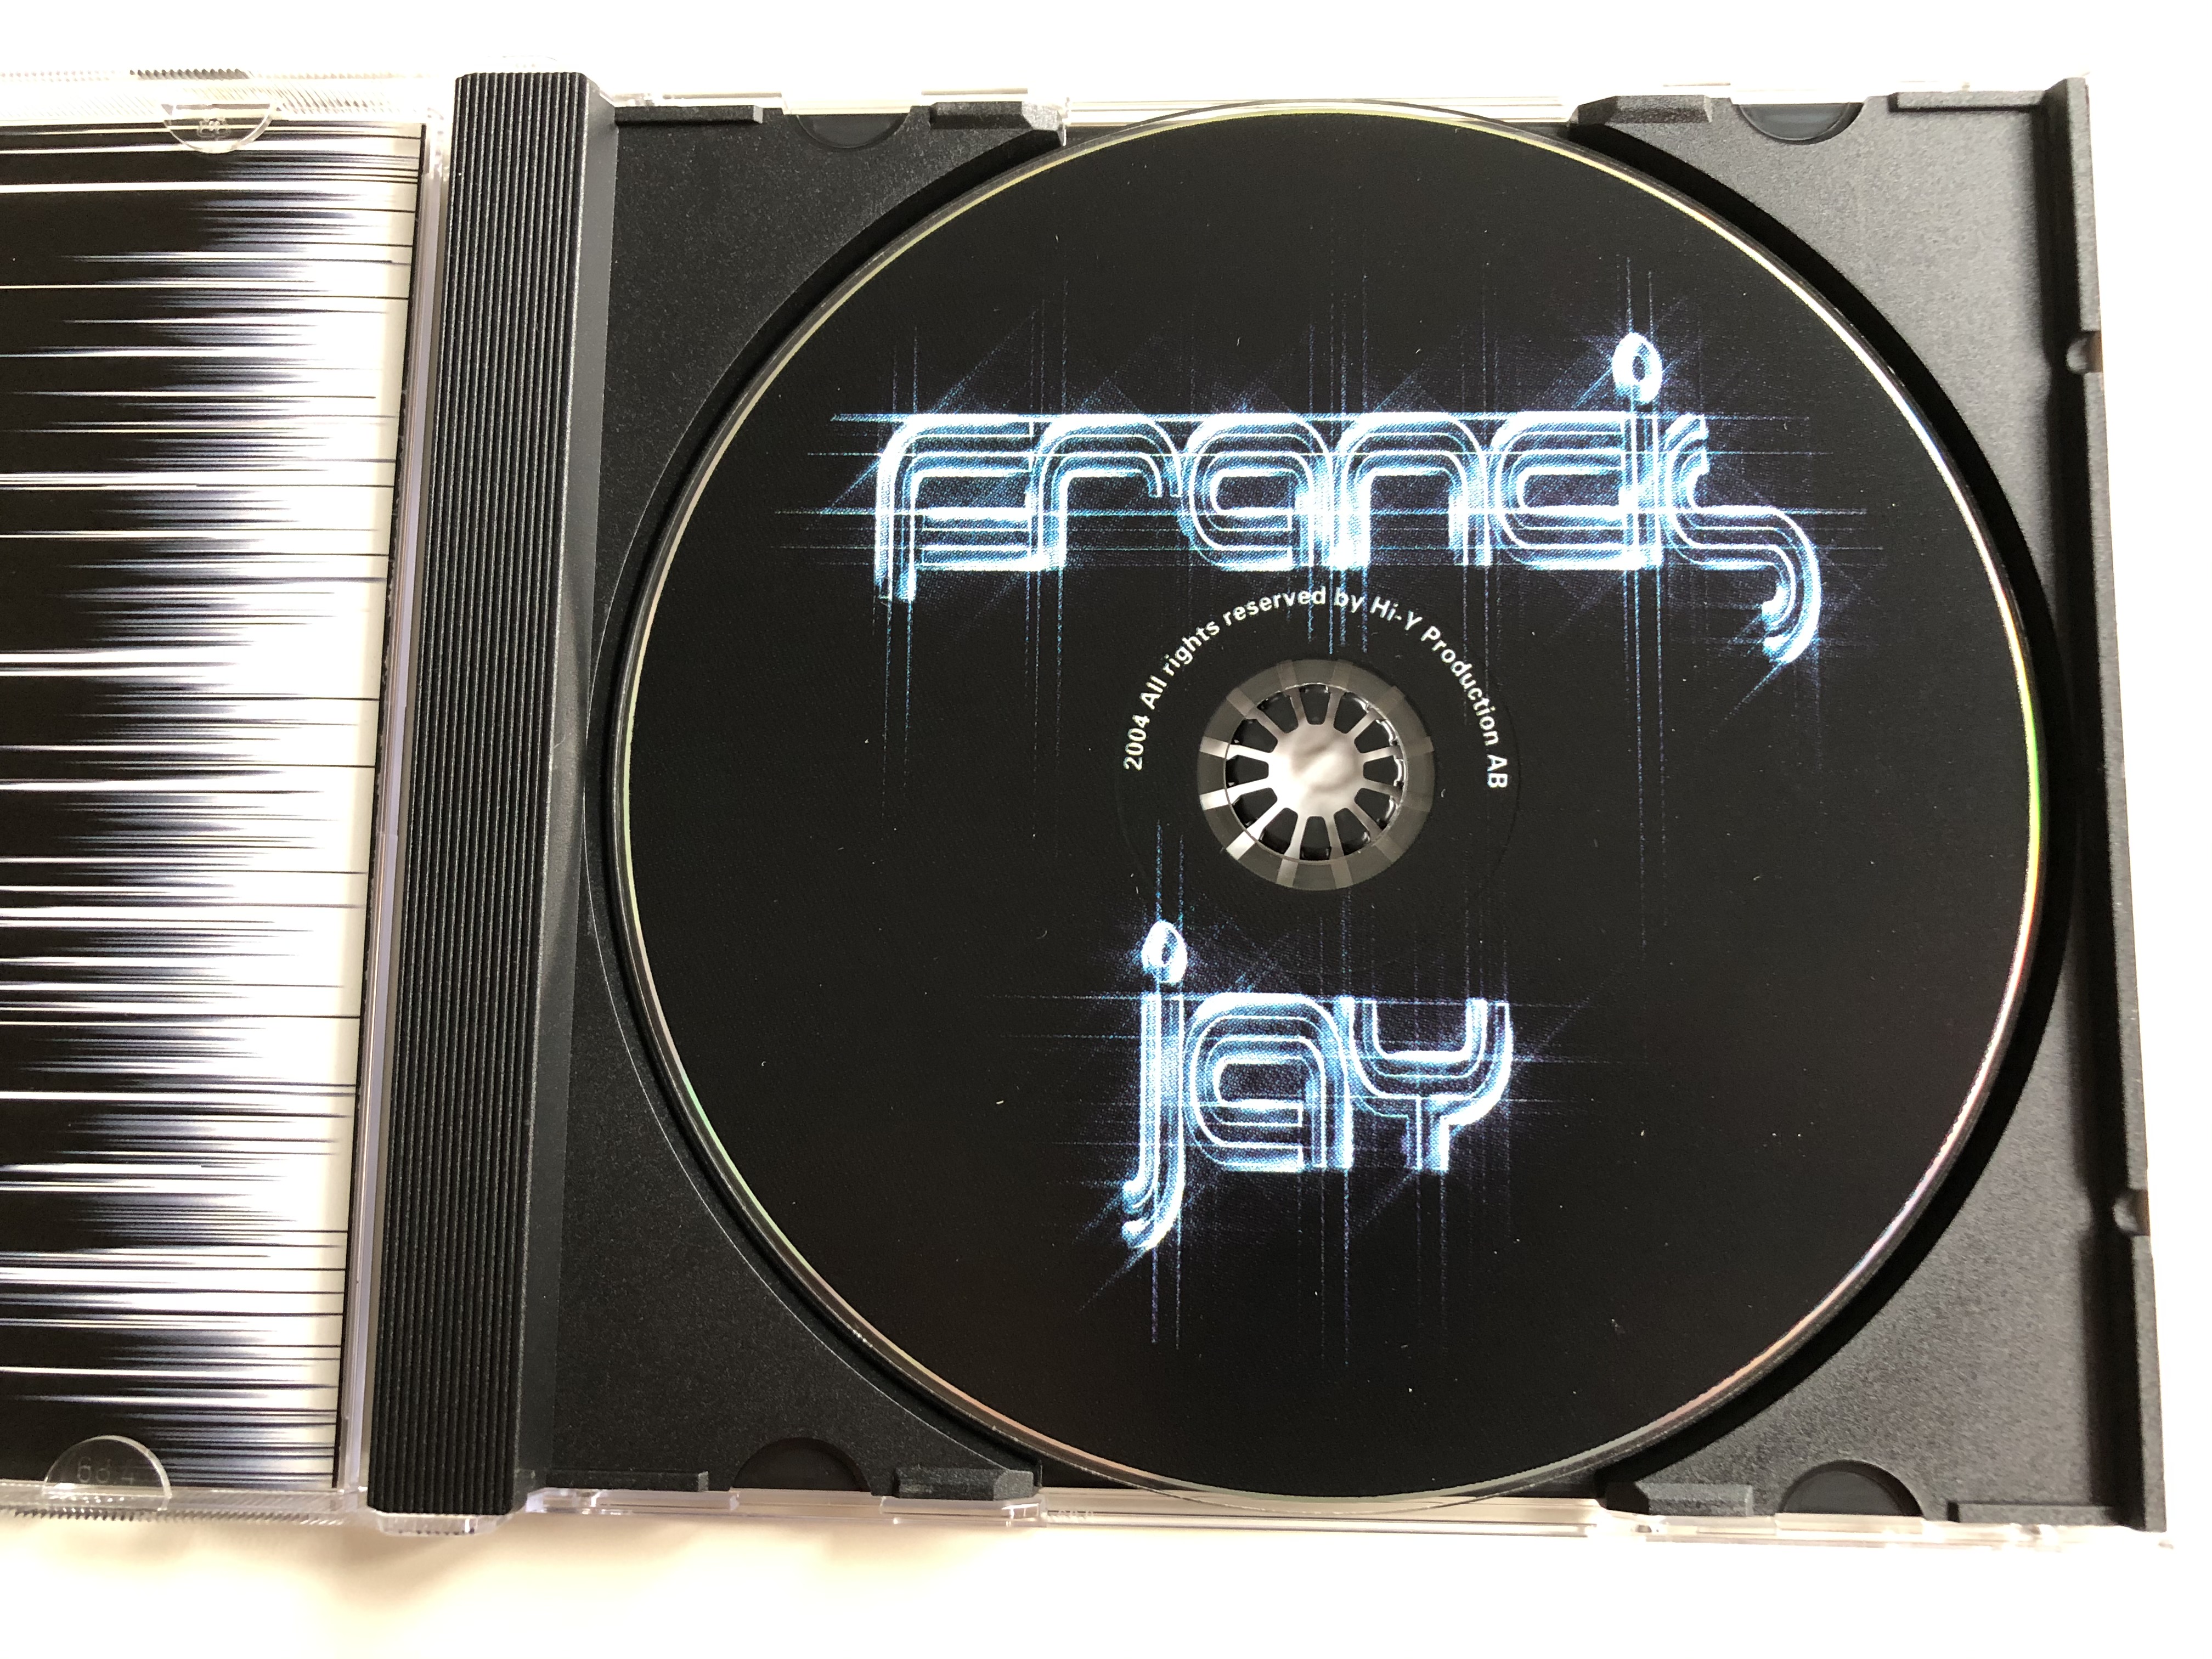 francis-jay-whats-up-hi-y-production-ab-audio-cd-2004-7320470046197-3-.jpg